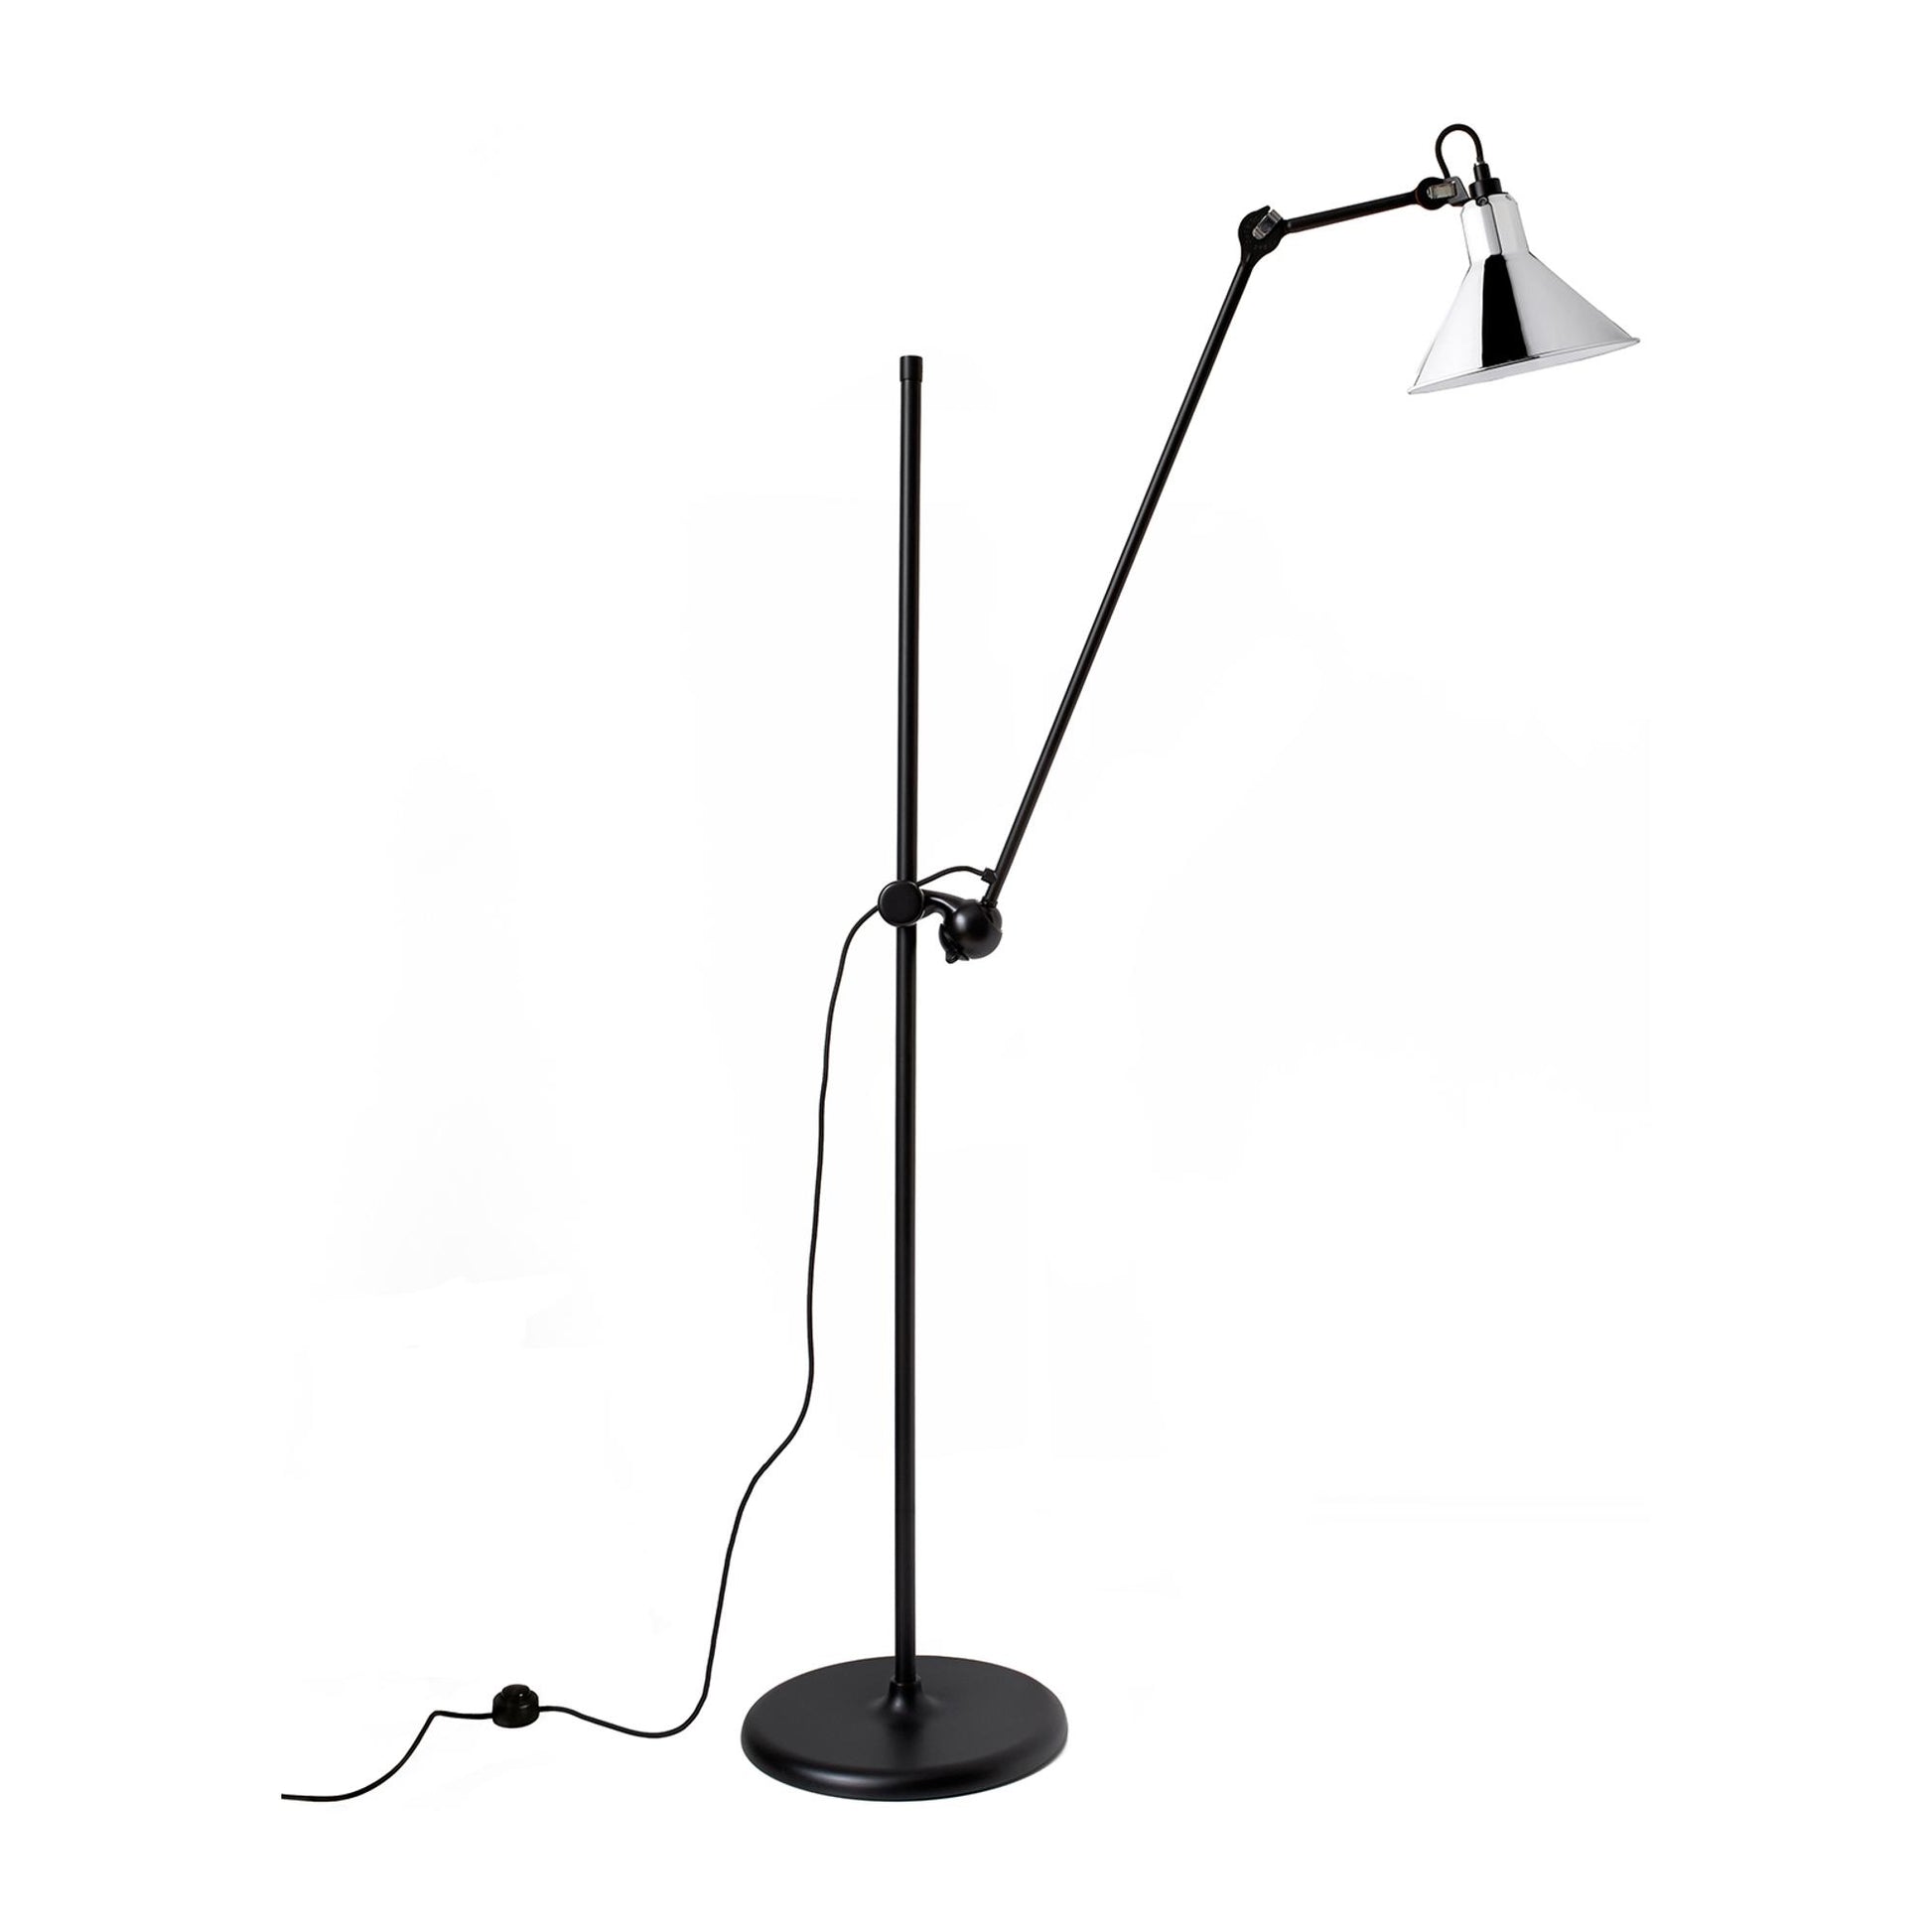 N215 Floor Lamp by Lampe Gras #Mat Black & Chrome